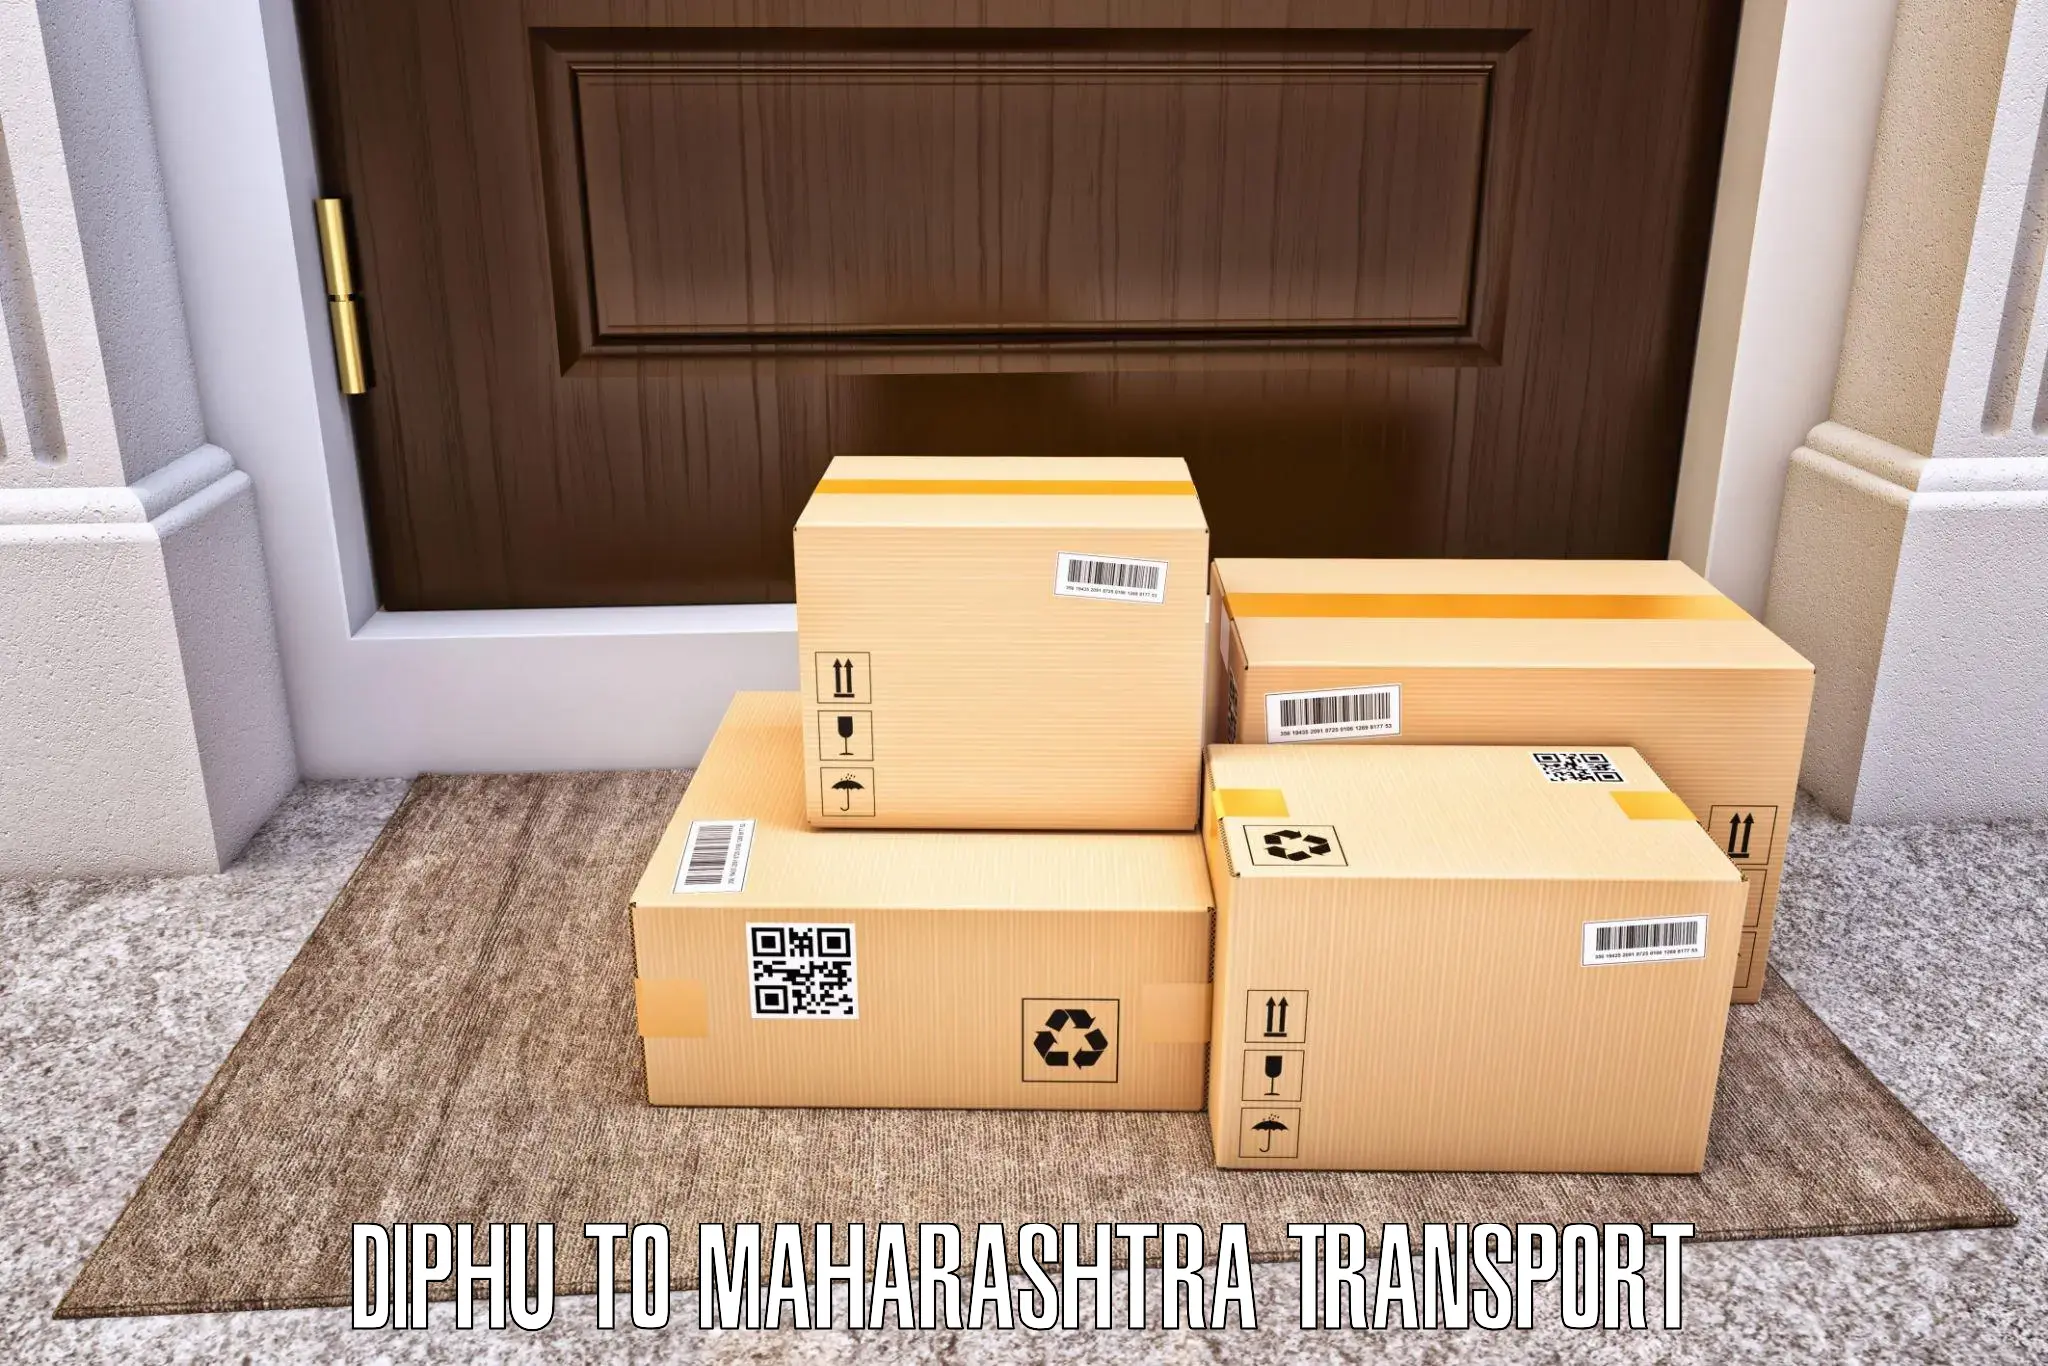 Transportation solution services Diphu to Kolhapur